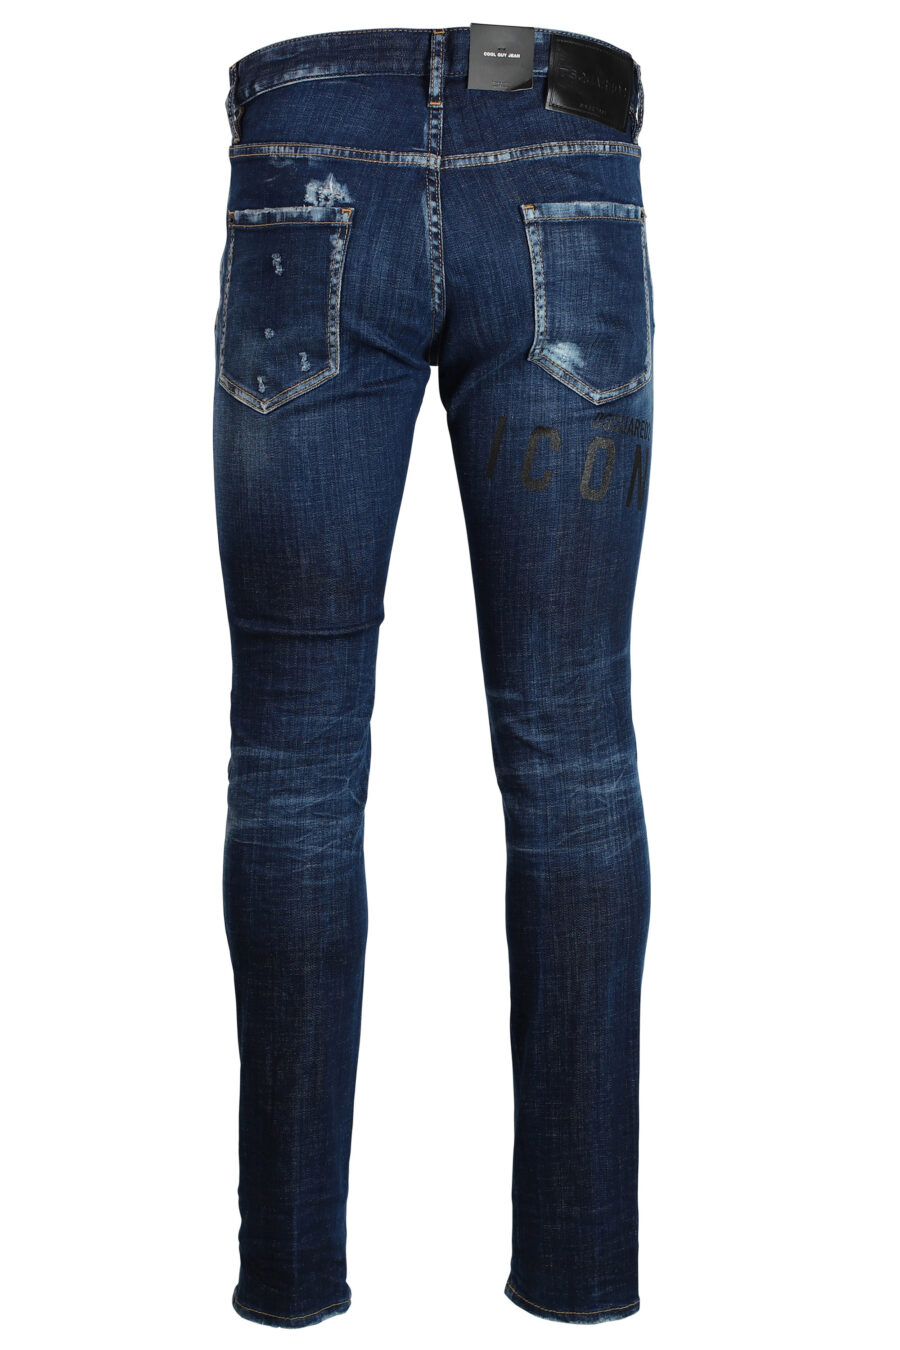 Icon cool guy" jeans dark blue semi-worn - 8052134643259 3